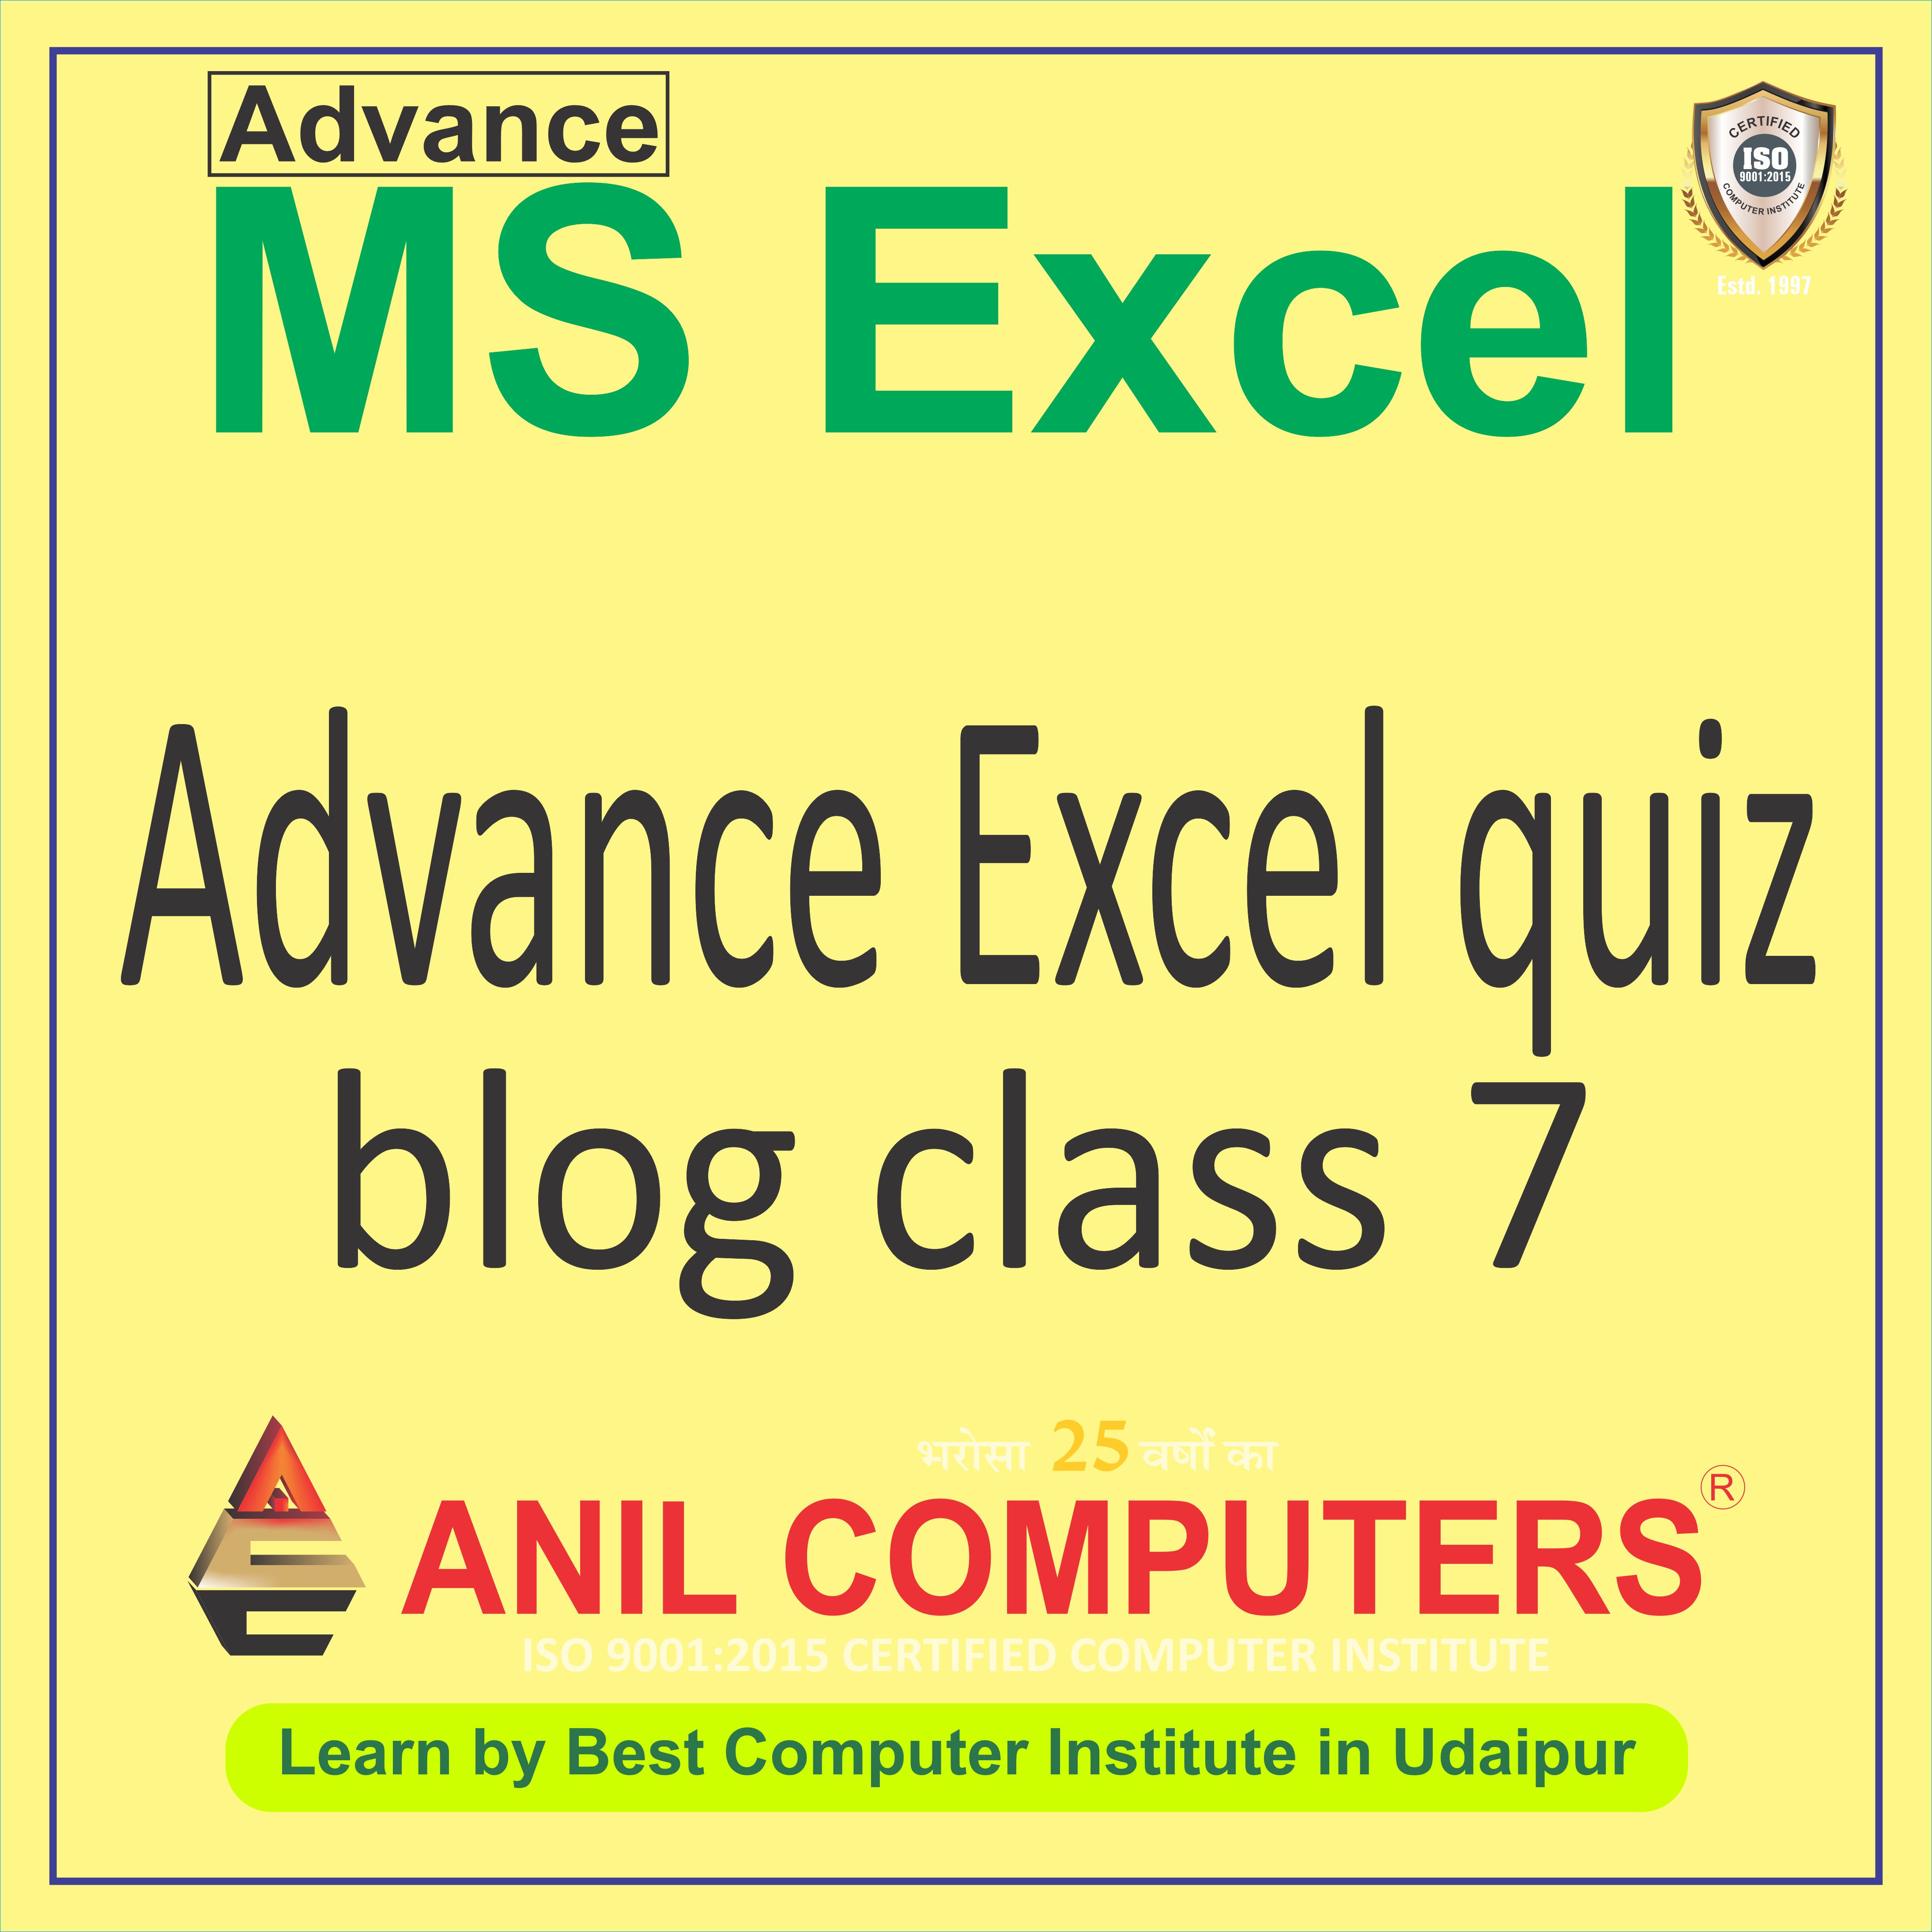 Advance Excel quiz blog class 7